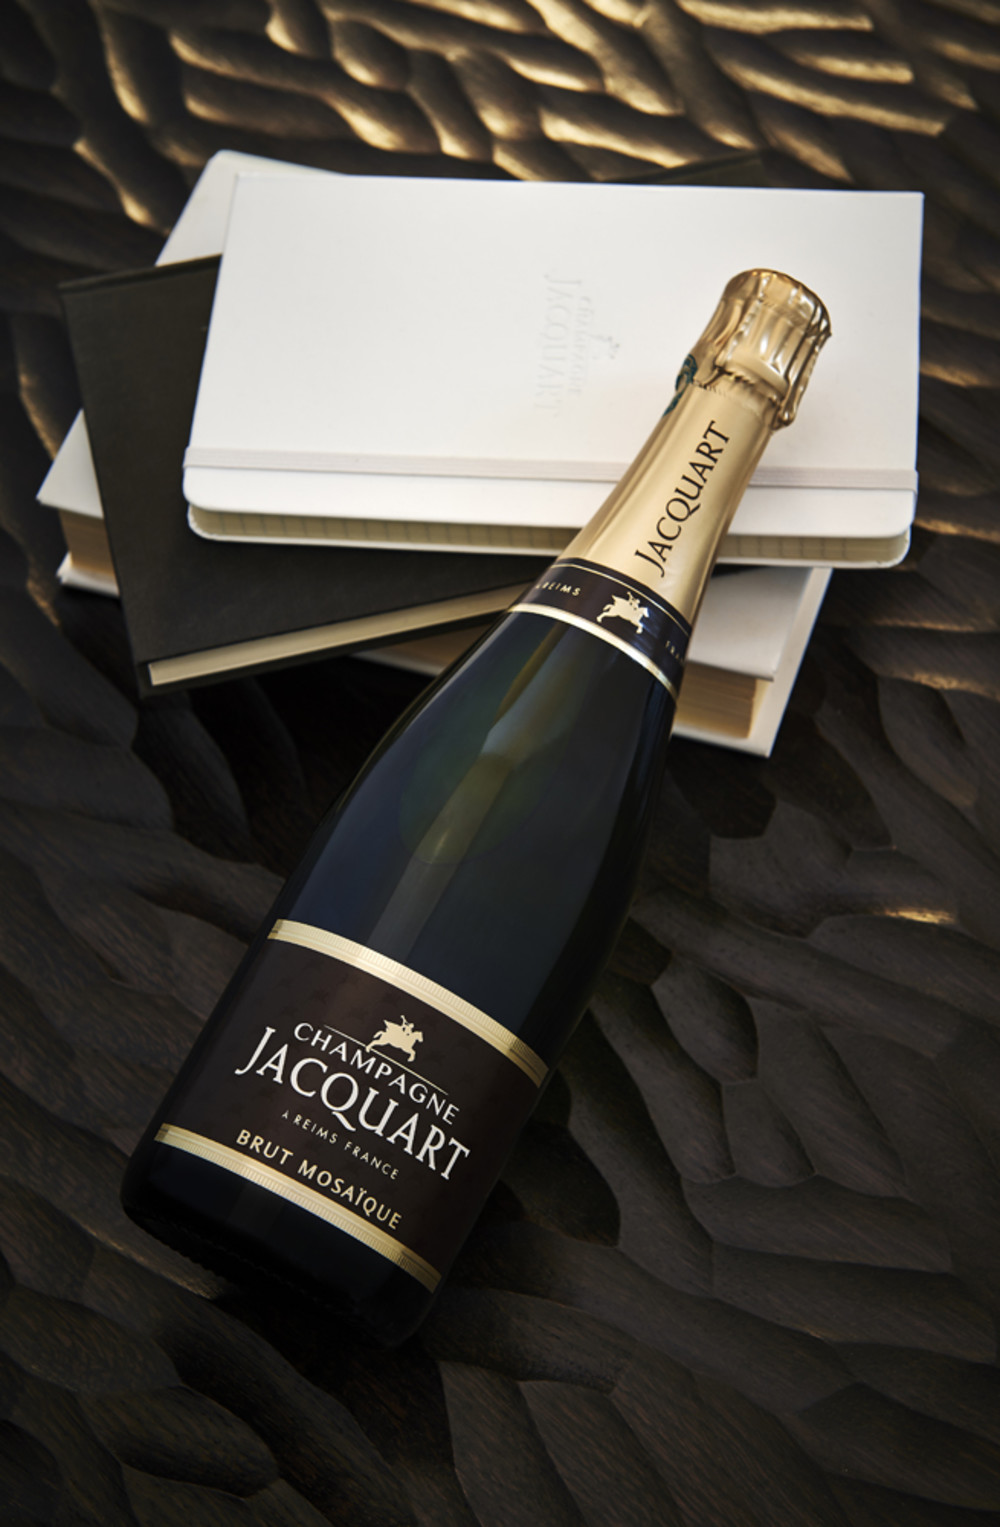 Champagne Jacquart-Homeage0902.jpg